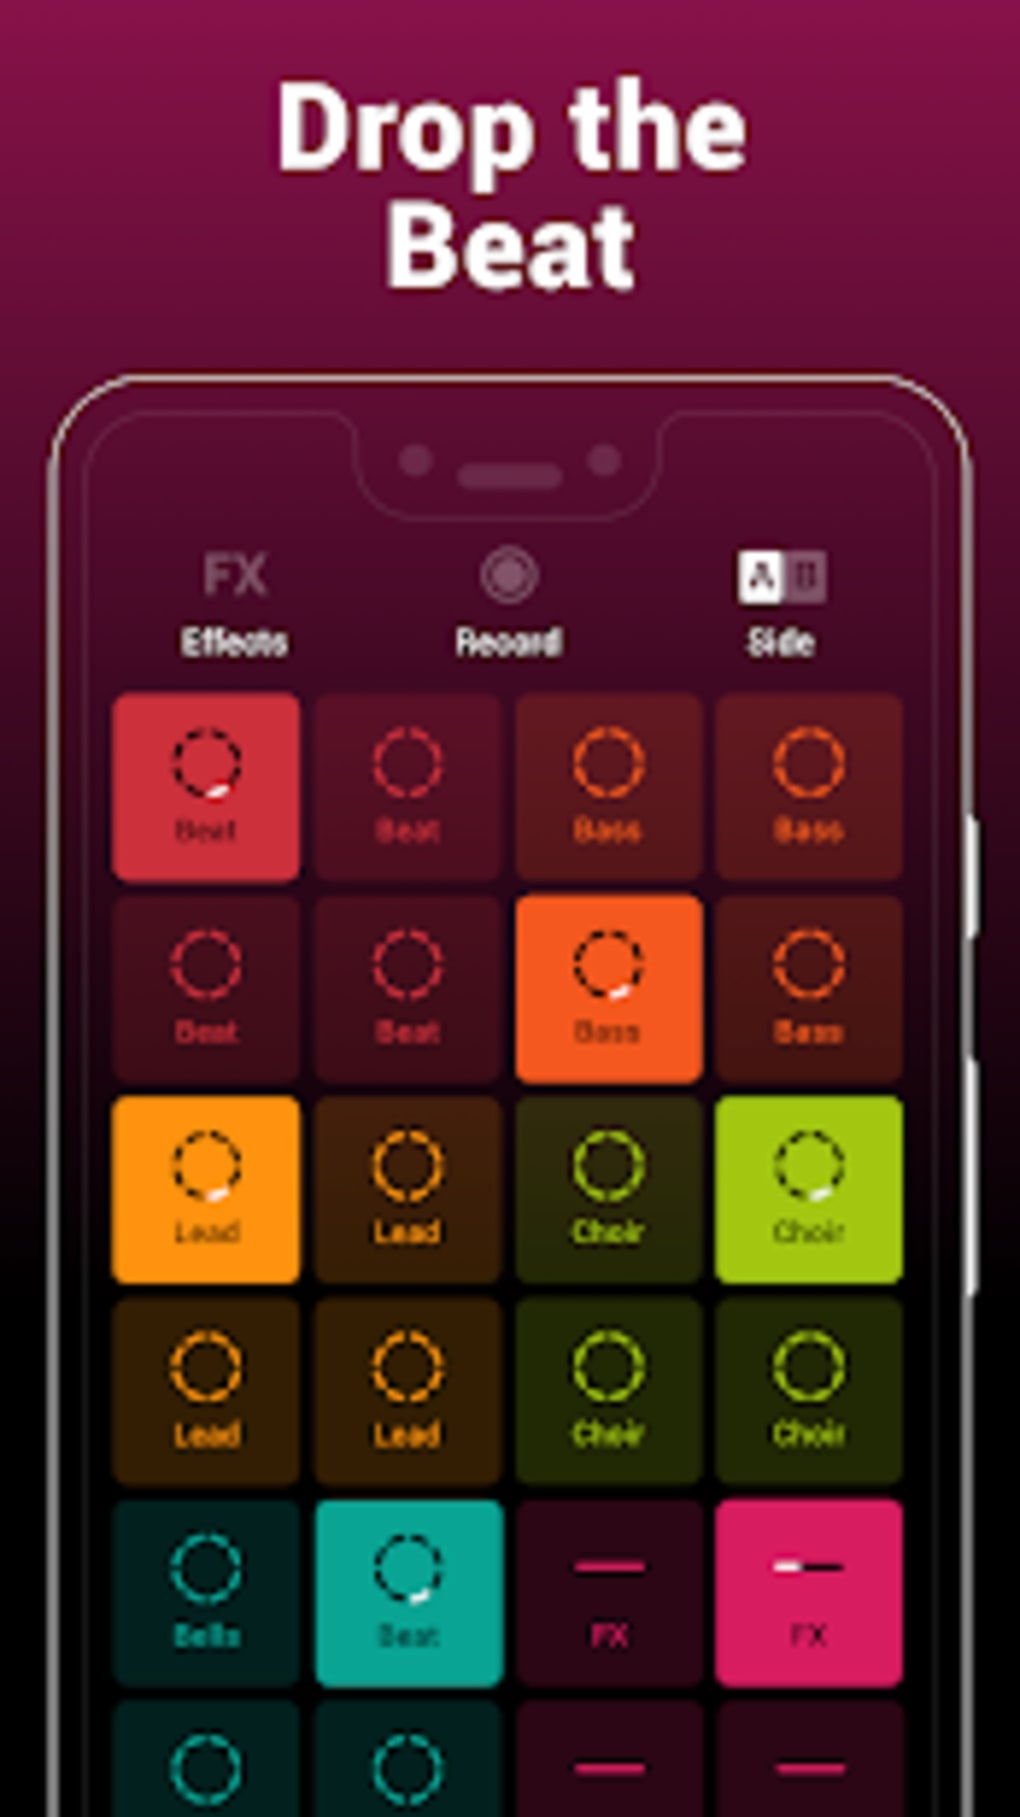 Groovepad - Fazer Música na App Store